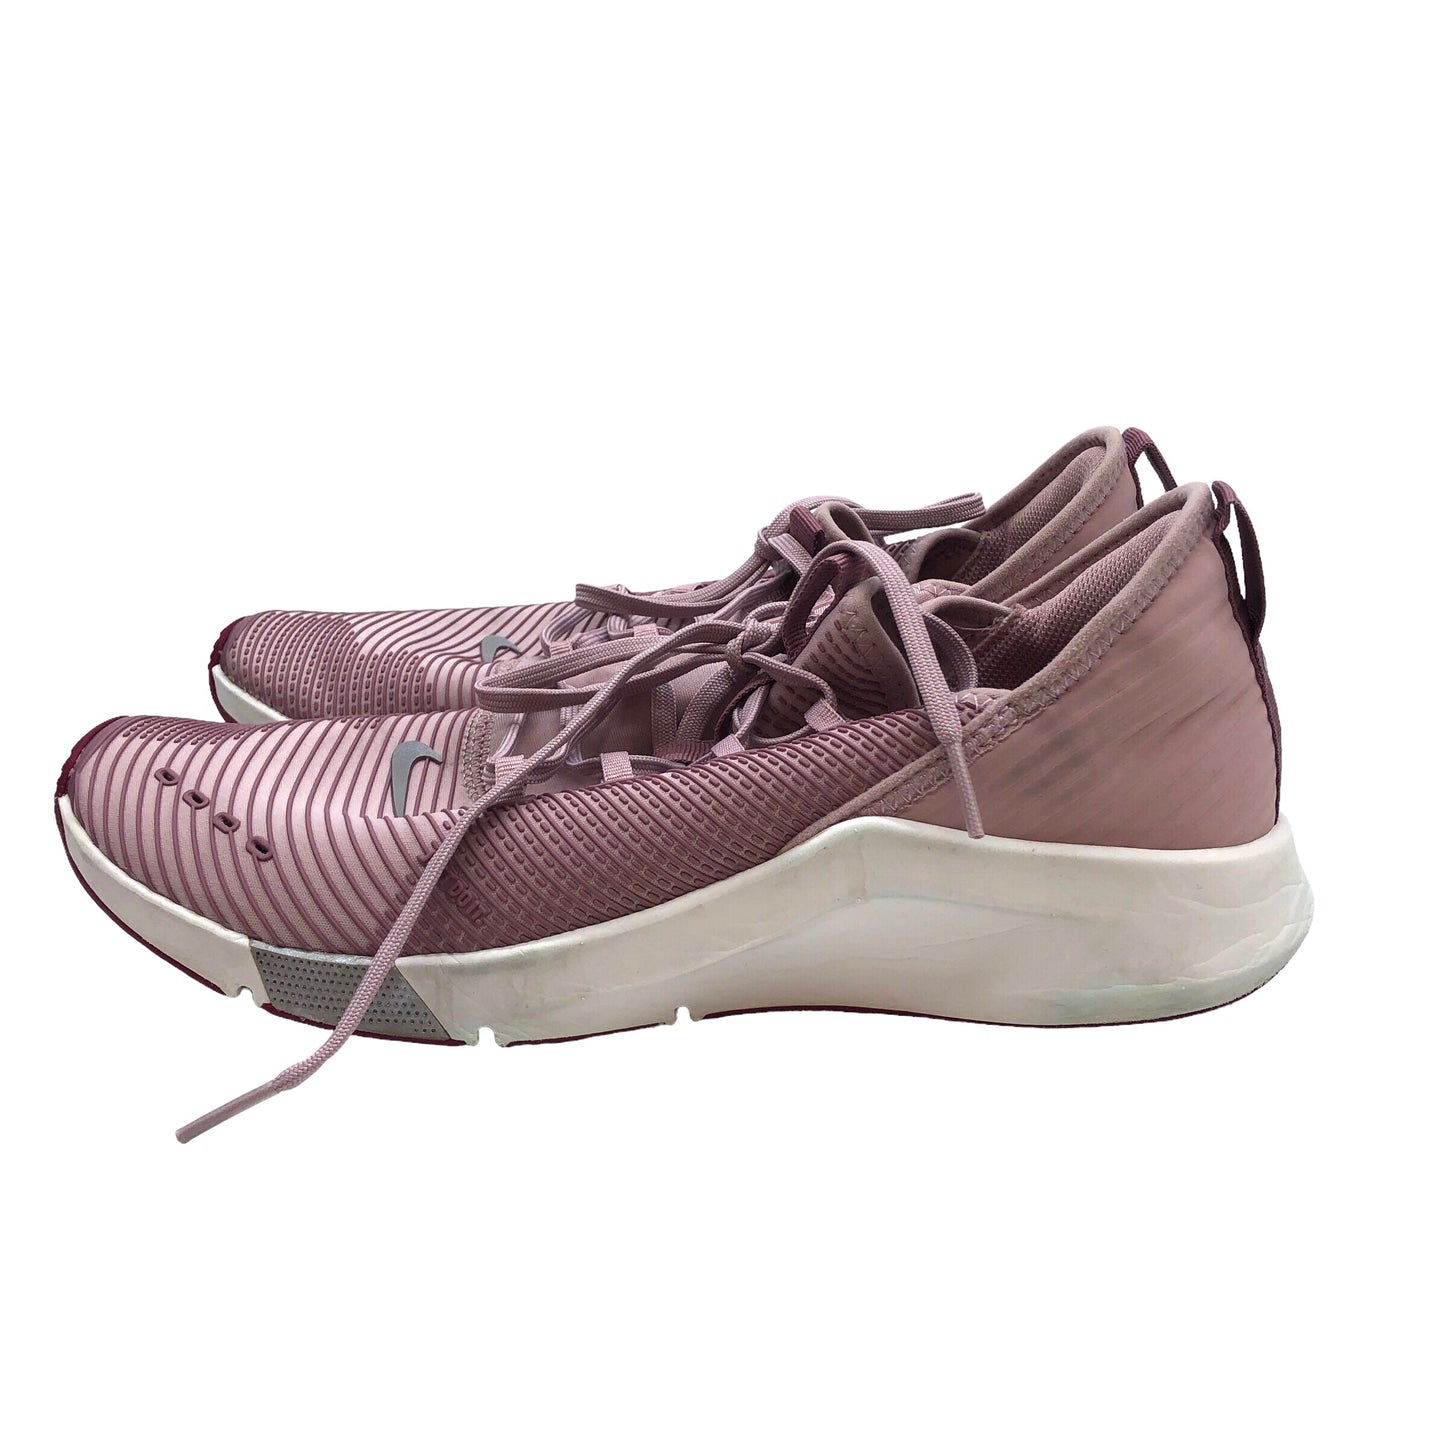 Purple Shoes Athletic Nike, Size 10